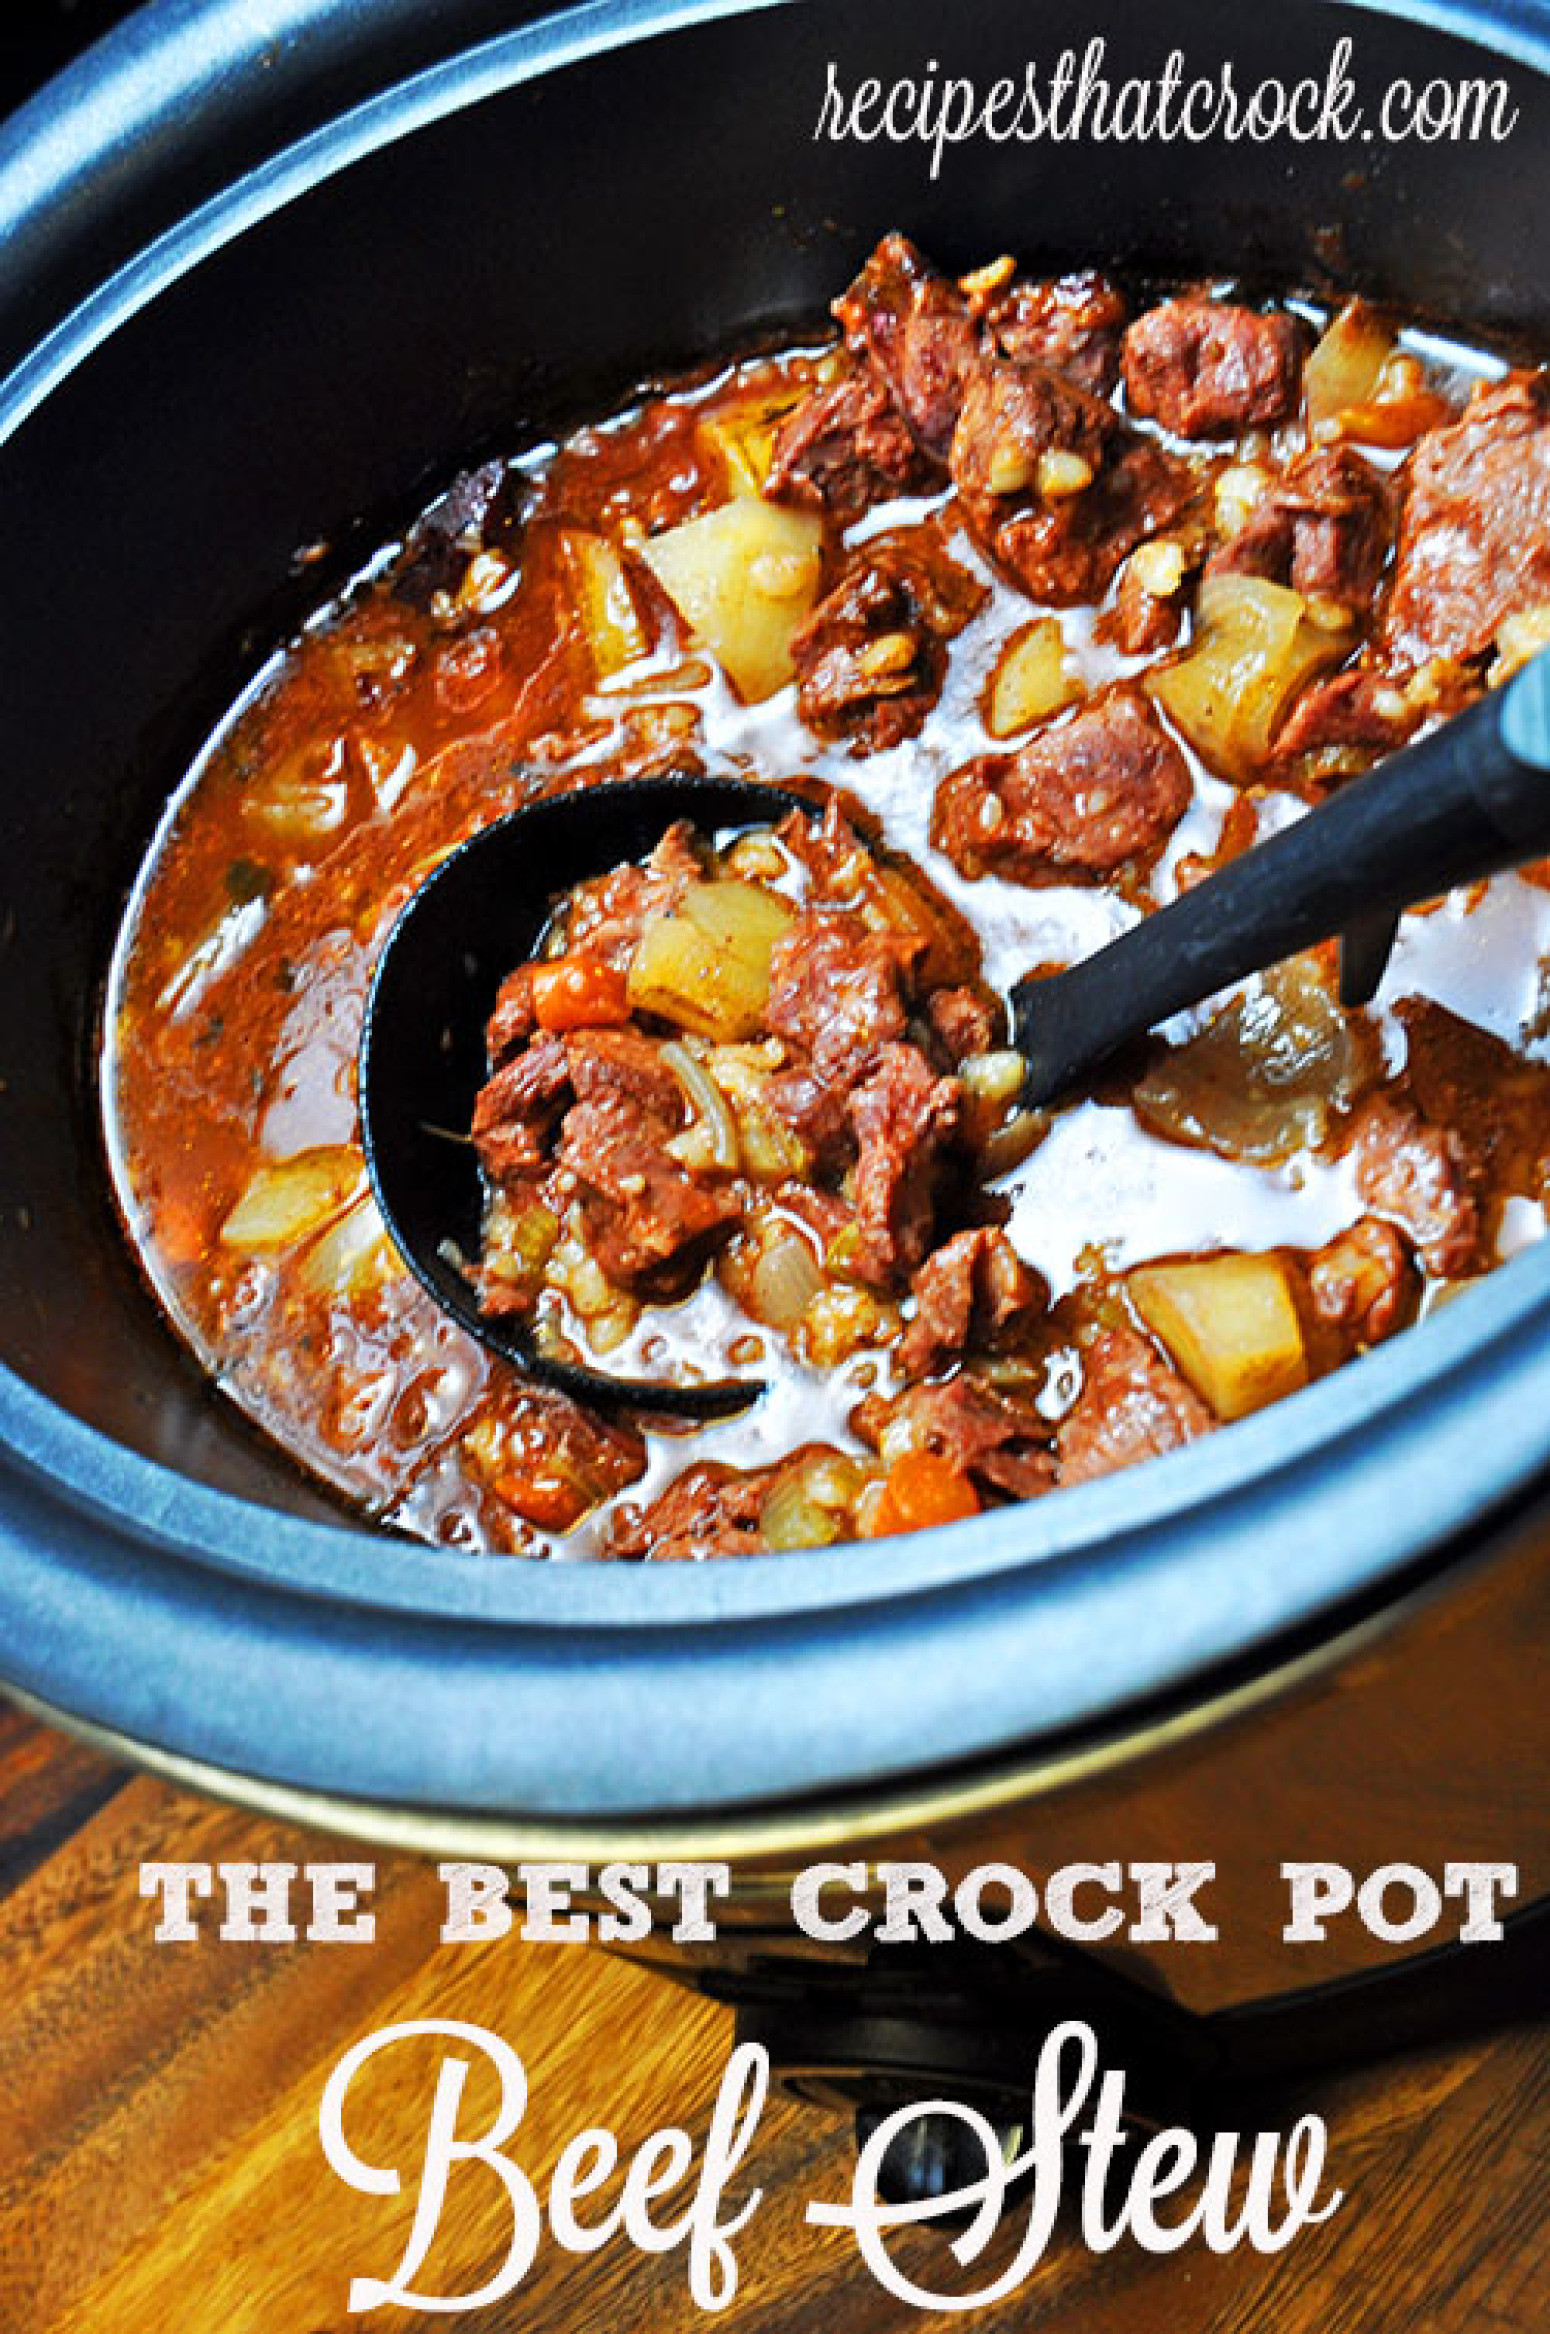 Pork Stew Crock Pot Recipes
 Crock Pot Beef Stew Recipe 13